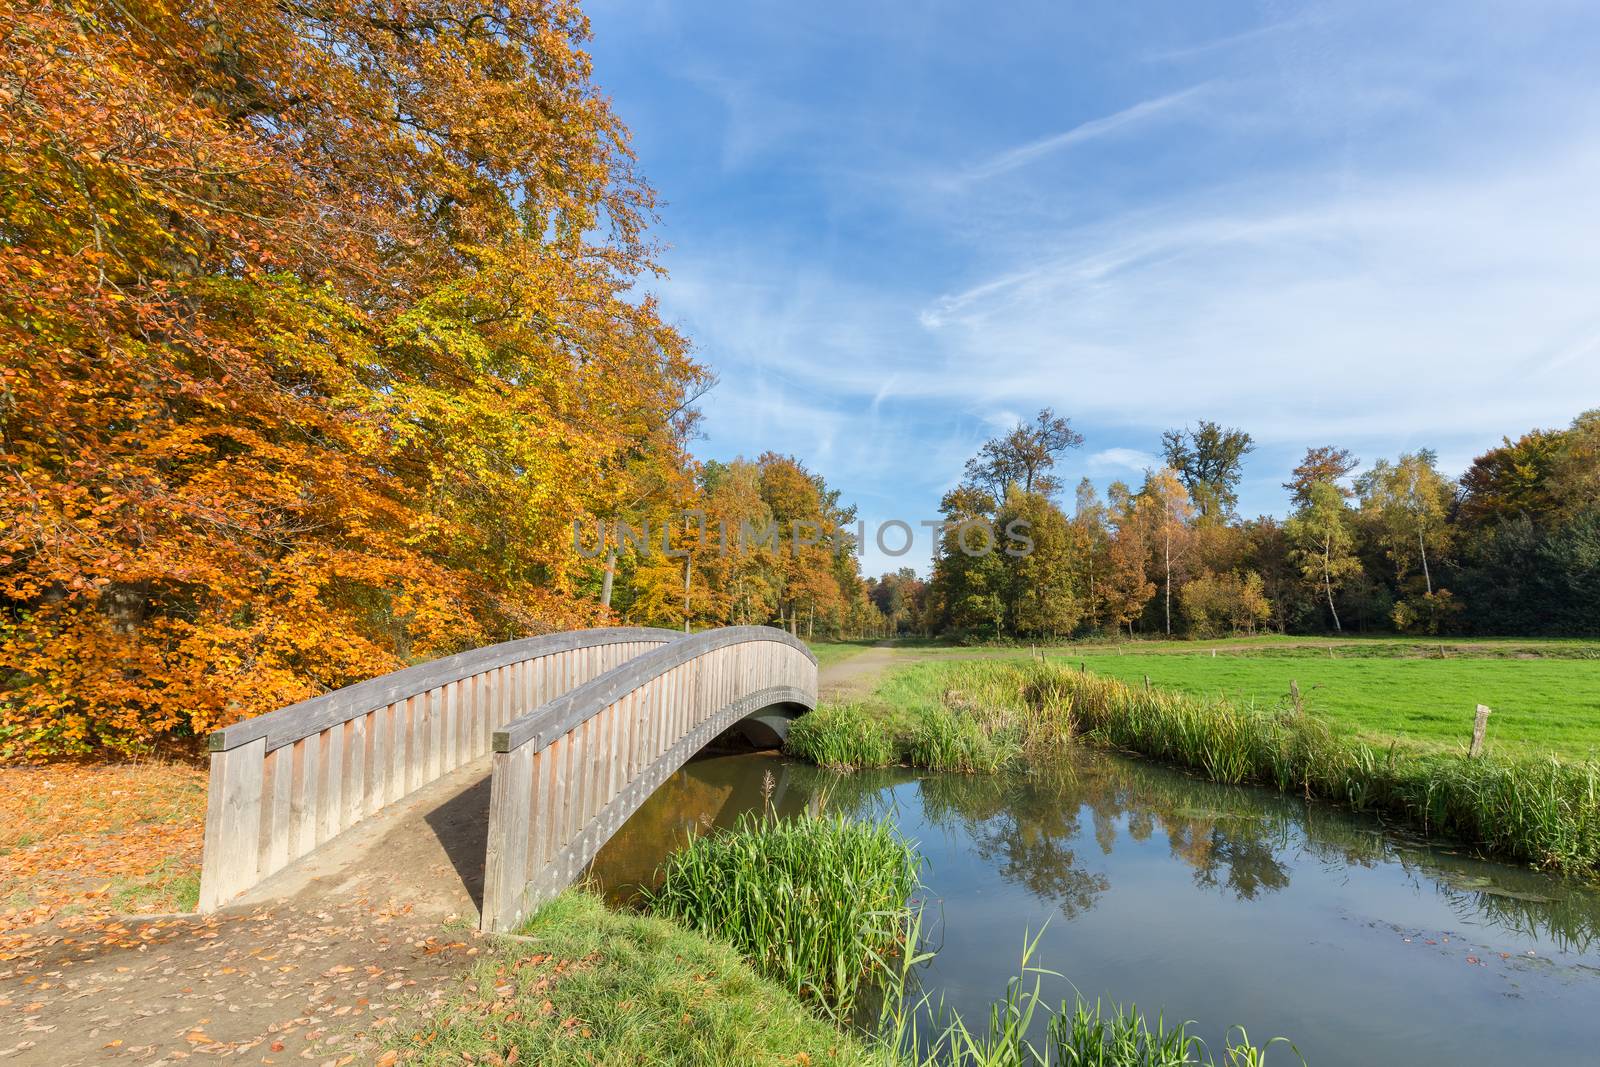 Autumn forest landscape with wooden bridge over water by BenSchonewille